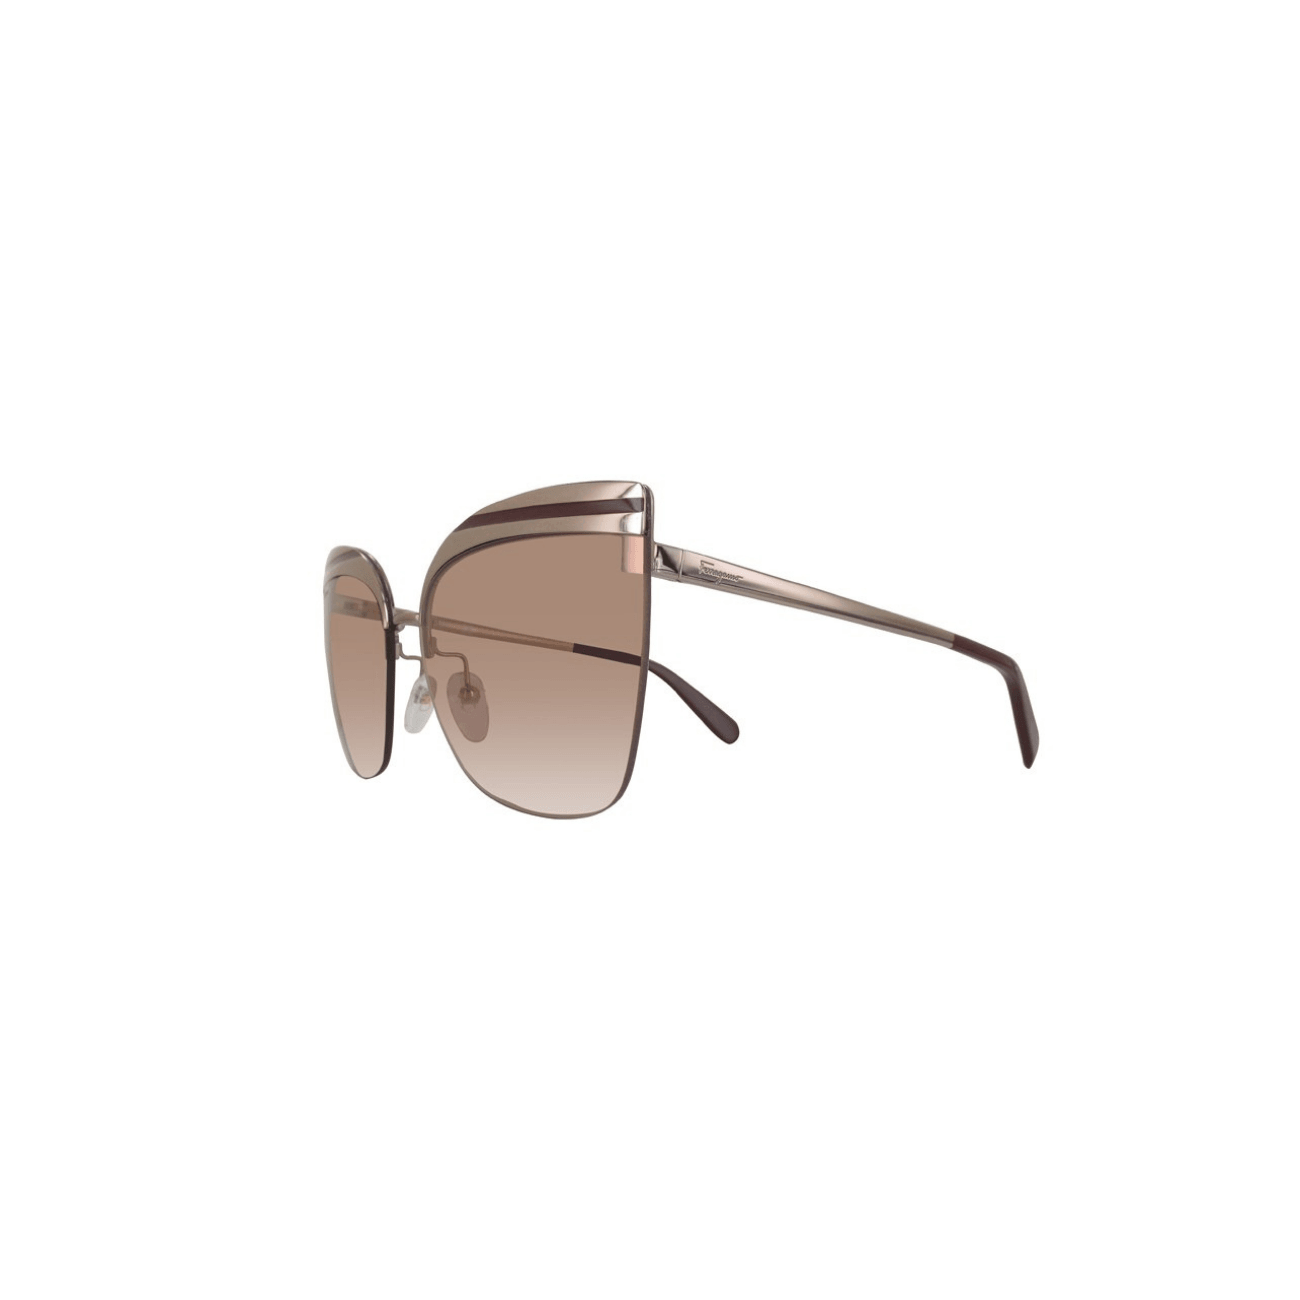 STYLIAN - Ferragamo SF166S-716-60 Oversize Women's Sunglasses, Shiny Rose Gold